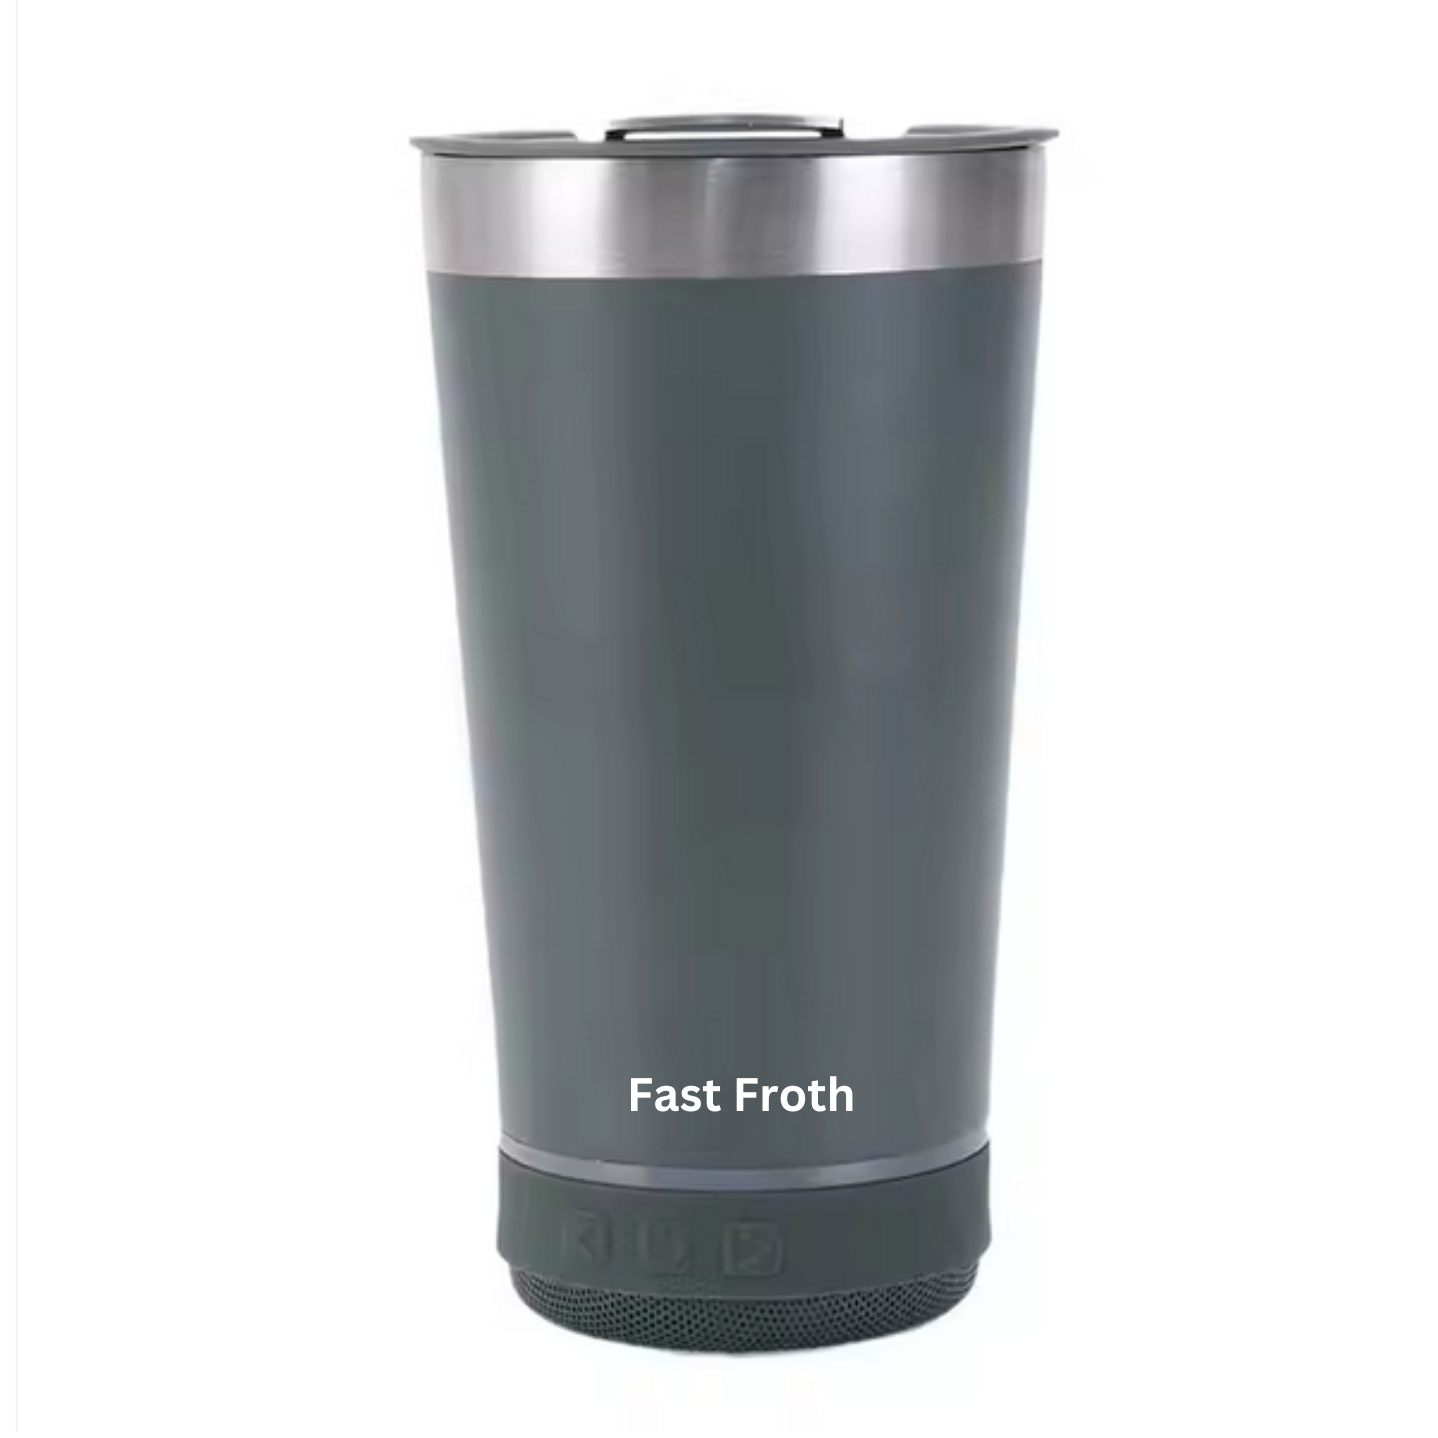 Fast Froth Smart Bluetooth audio Thermos Mug